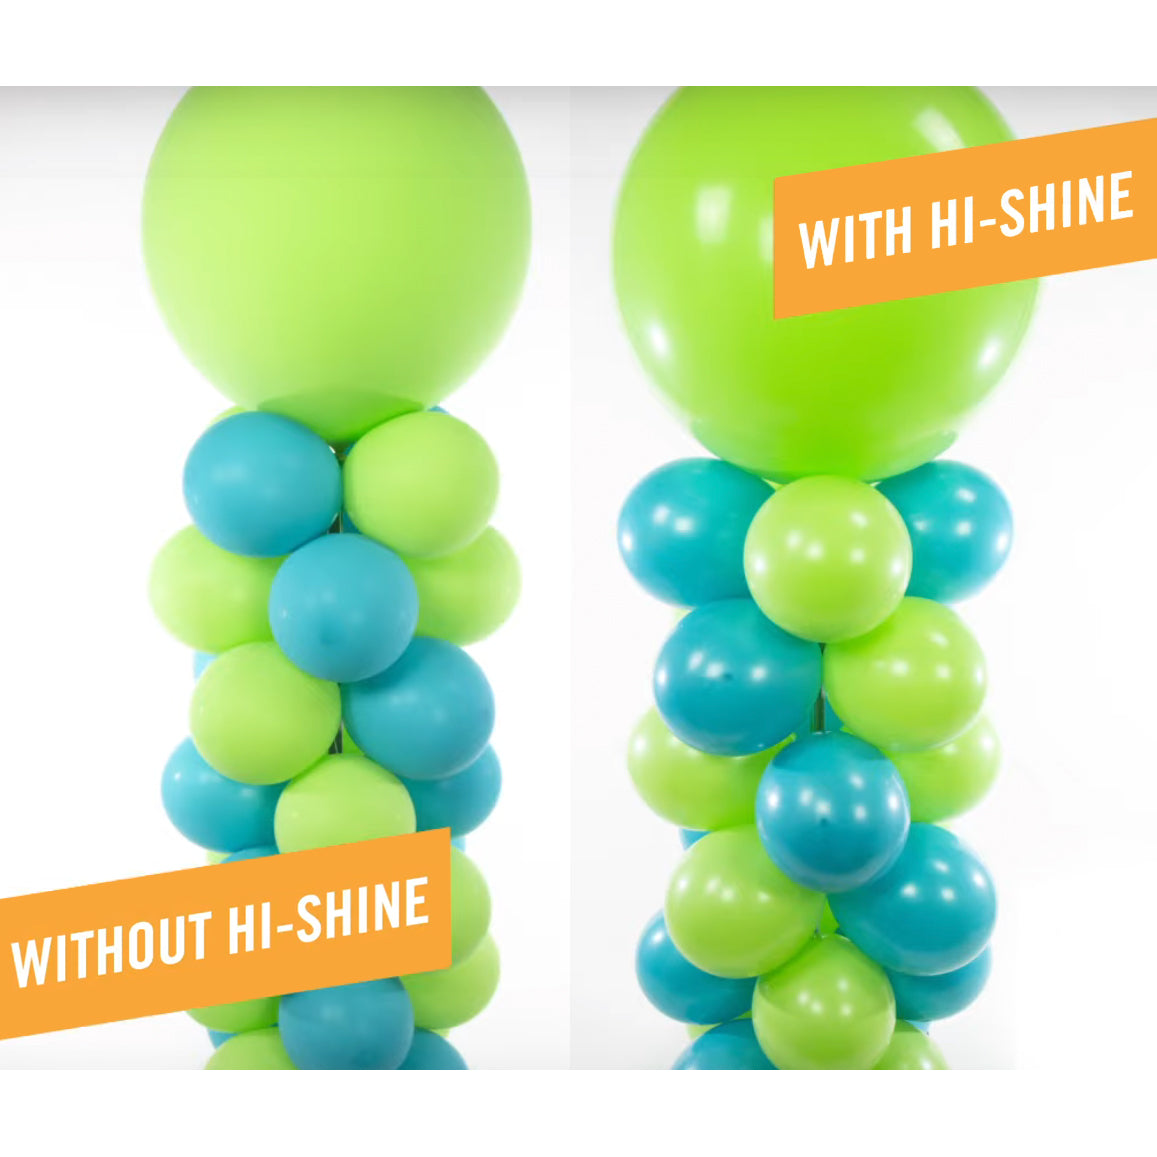 Balloon Accessories - Hi Float/Balloon Glow/Balloon Shine - Hi